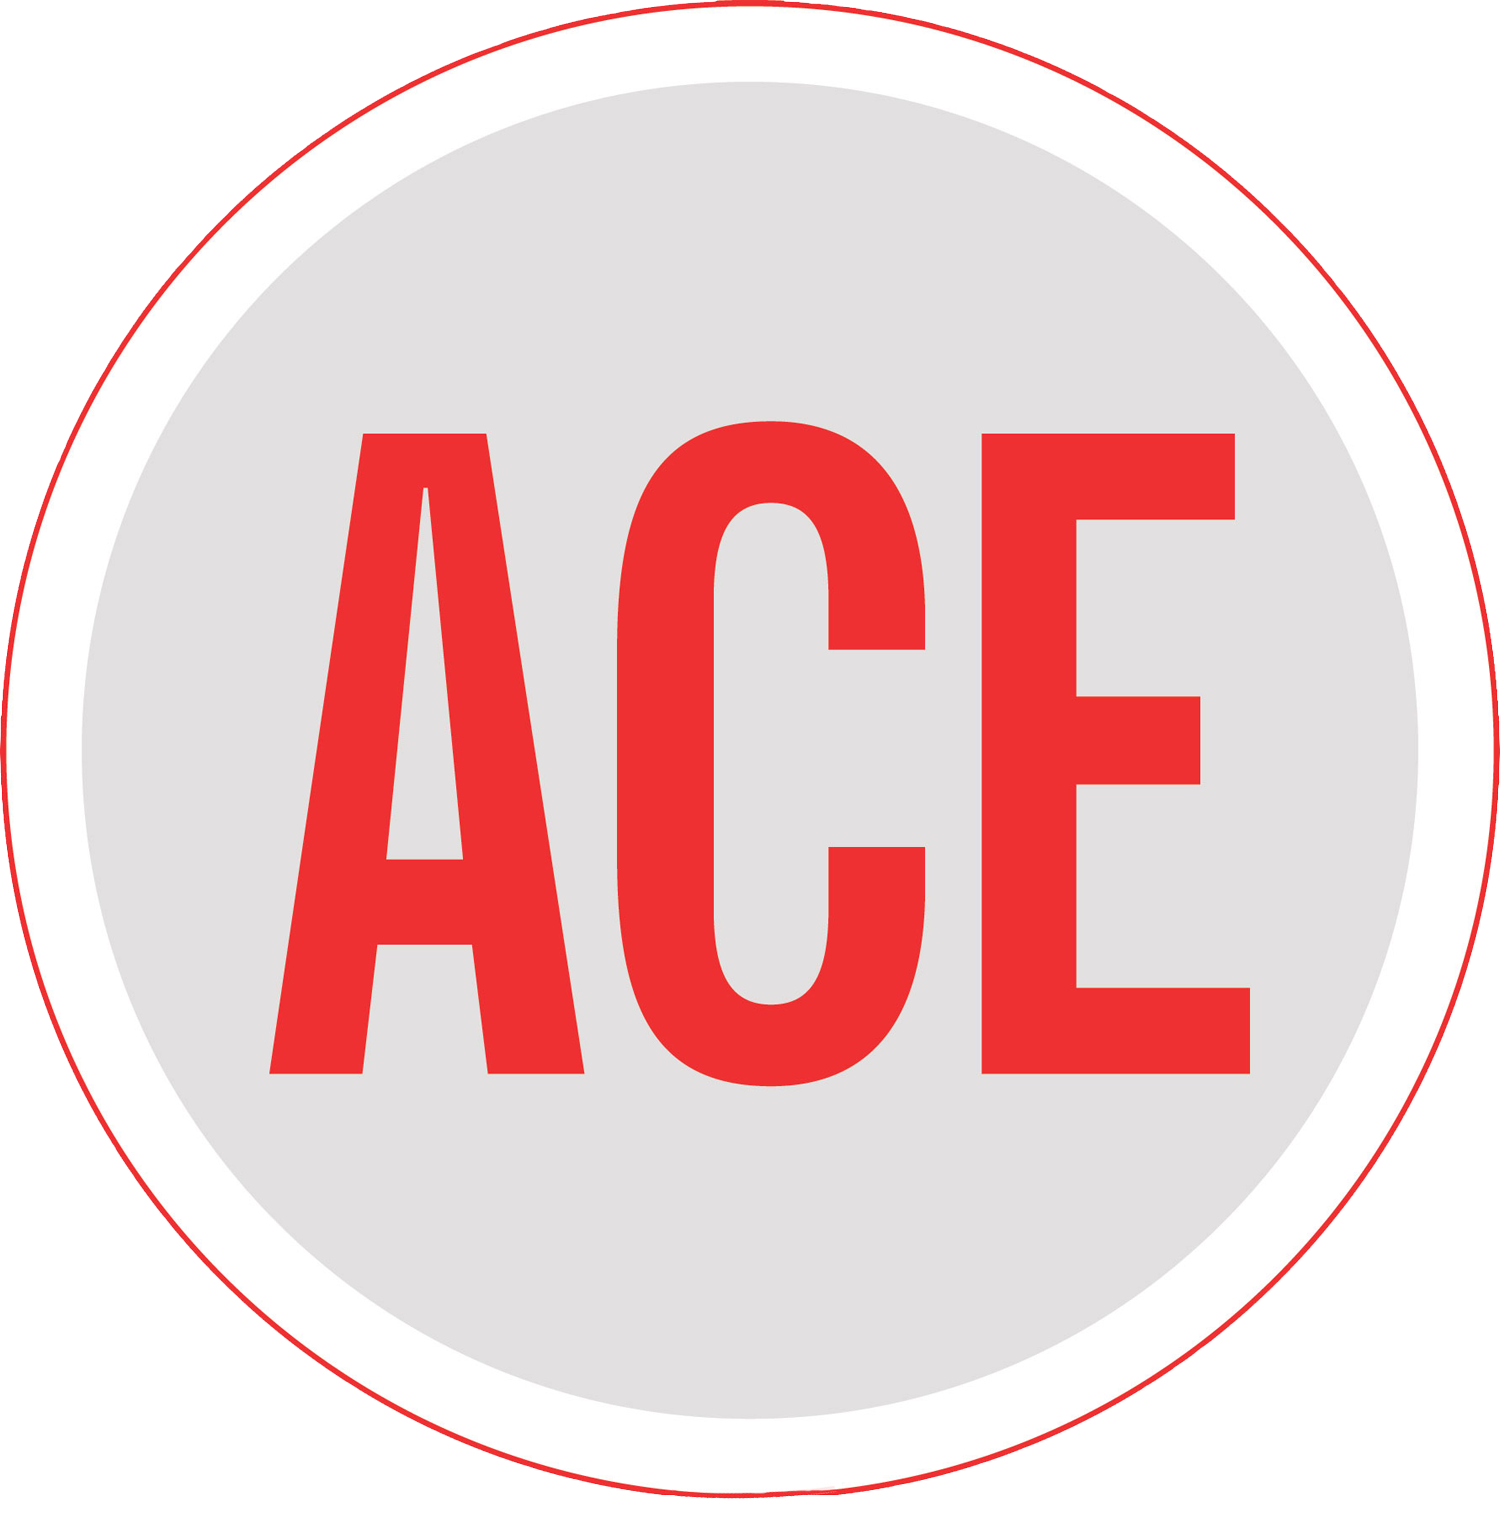 https://acenewyork.org/wp-content/uploads/2017/03/ACE-Logo-Trans-Background.png